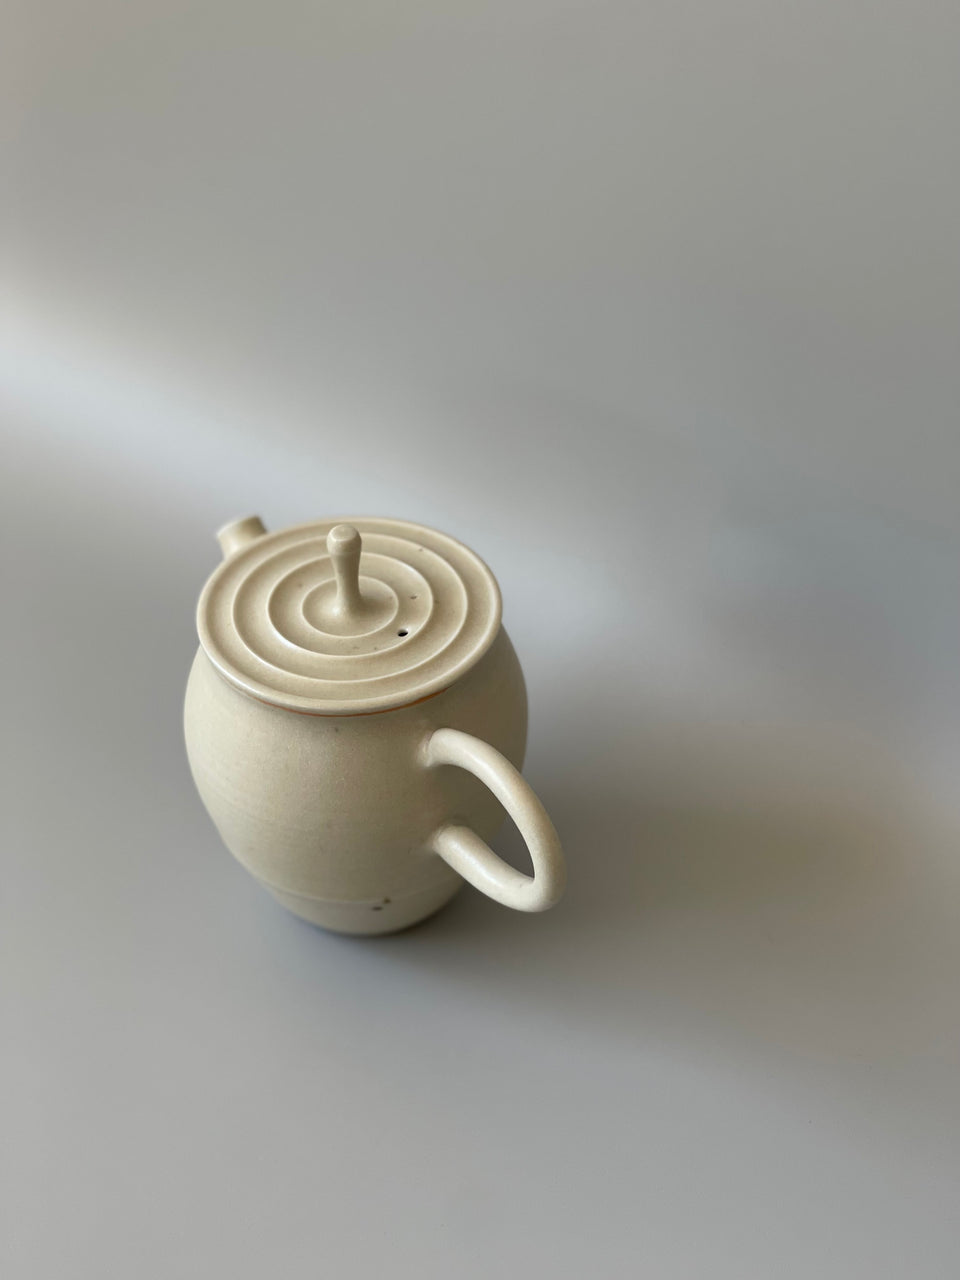 Vintage Yellow Celadon Teapot - 150ml